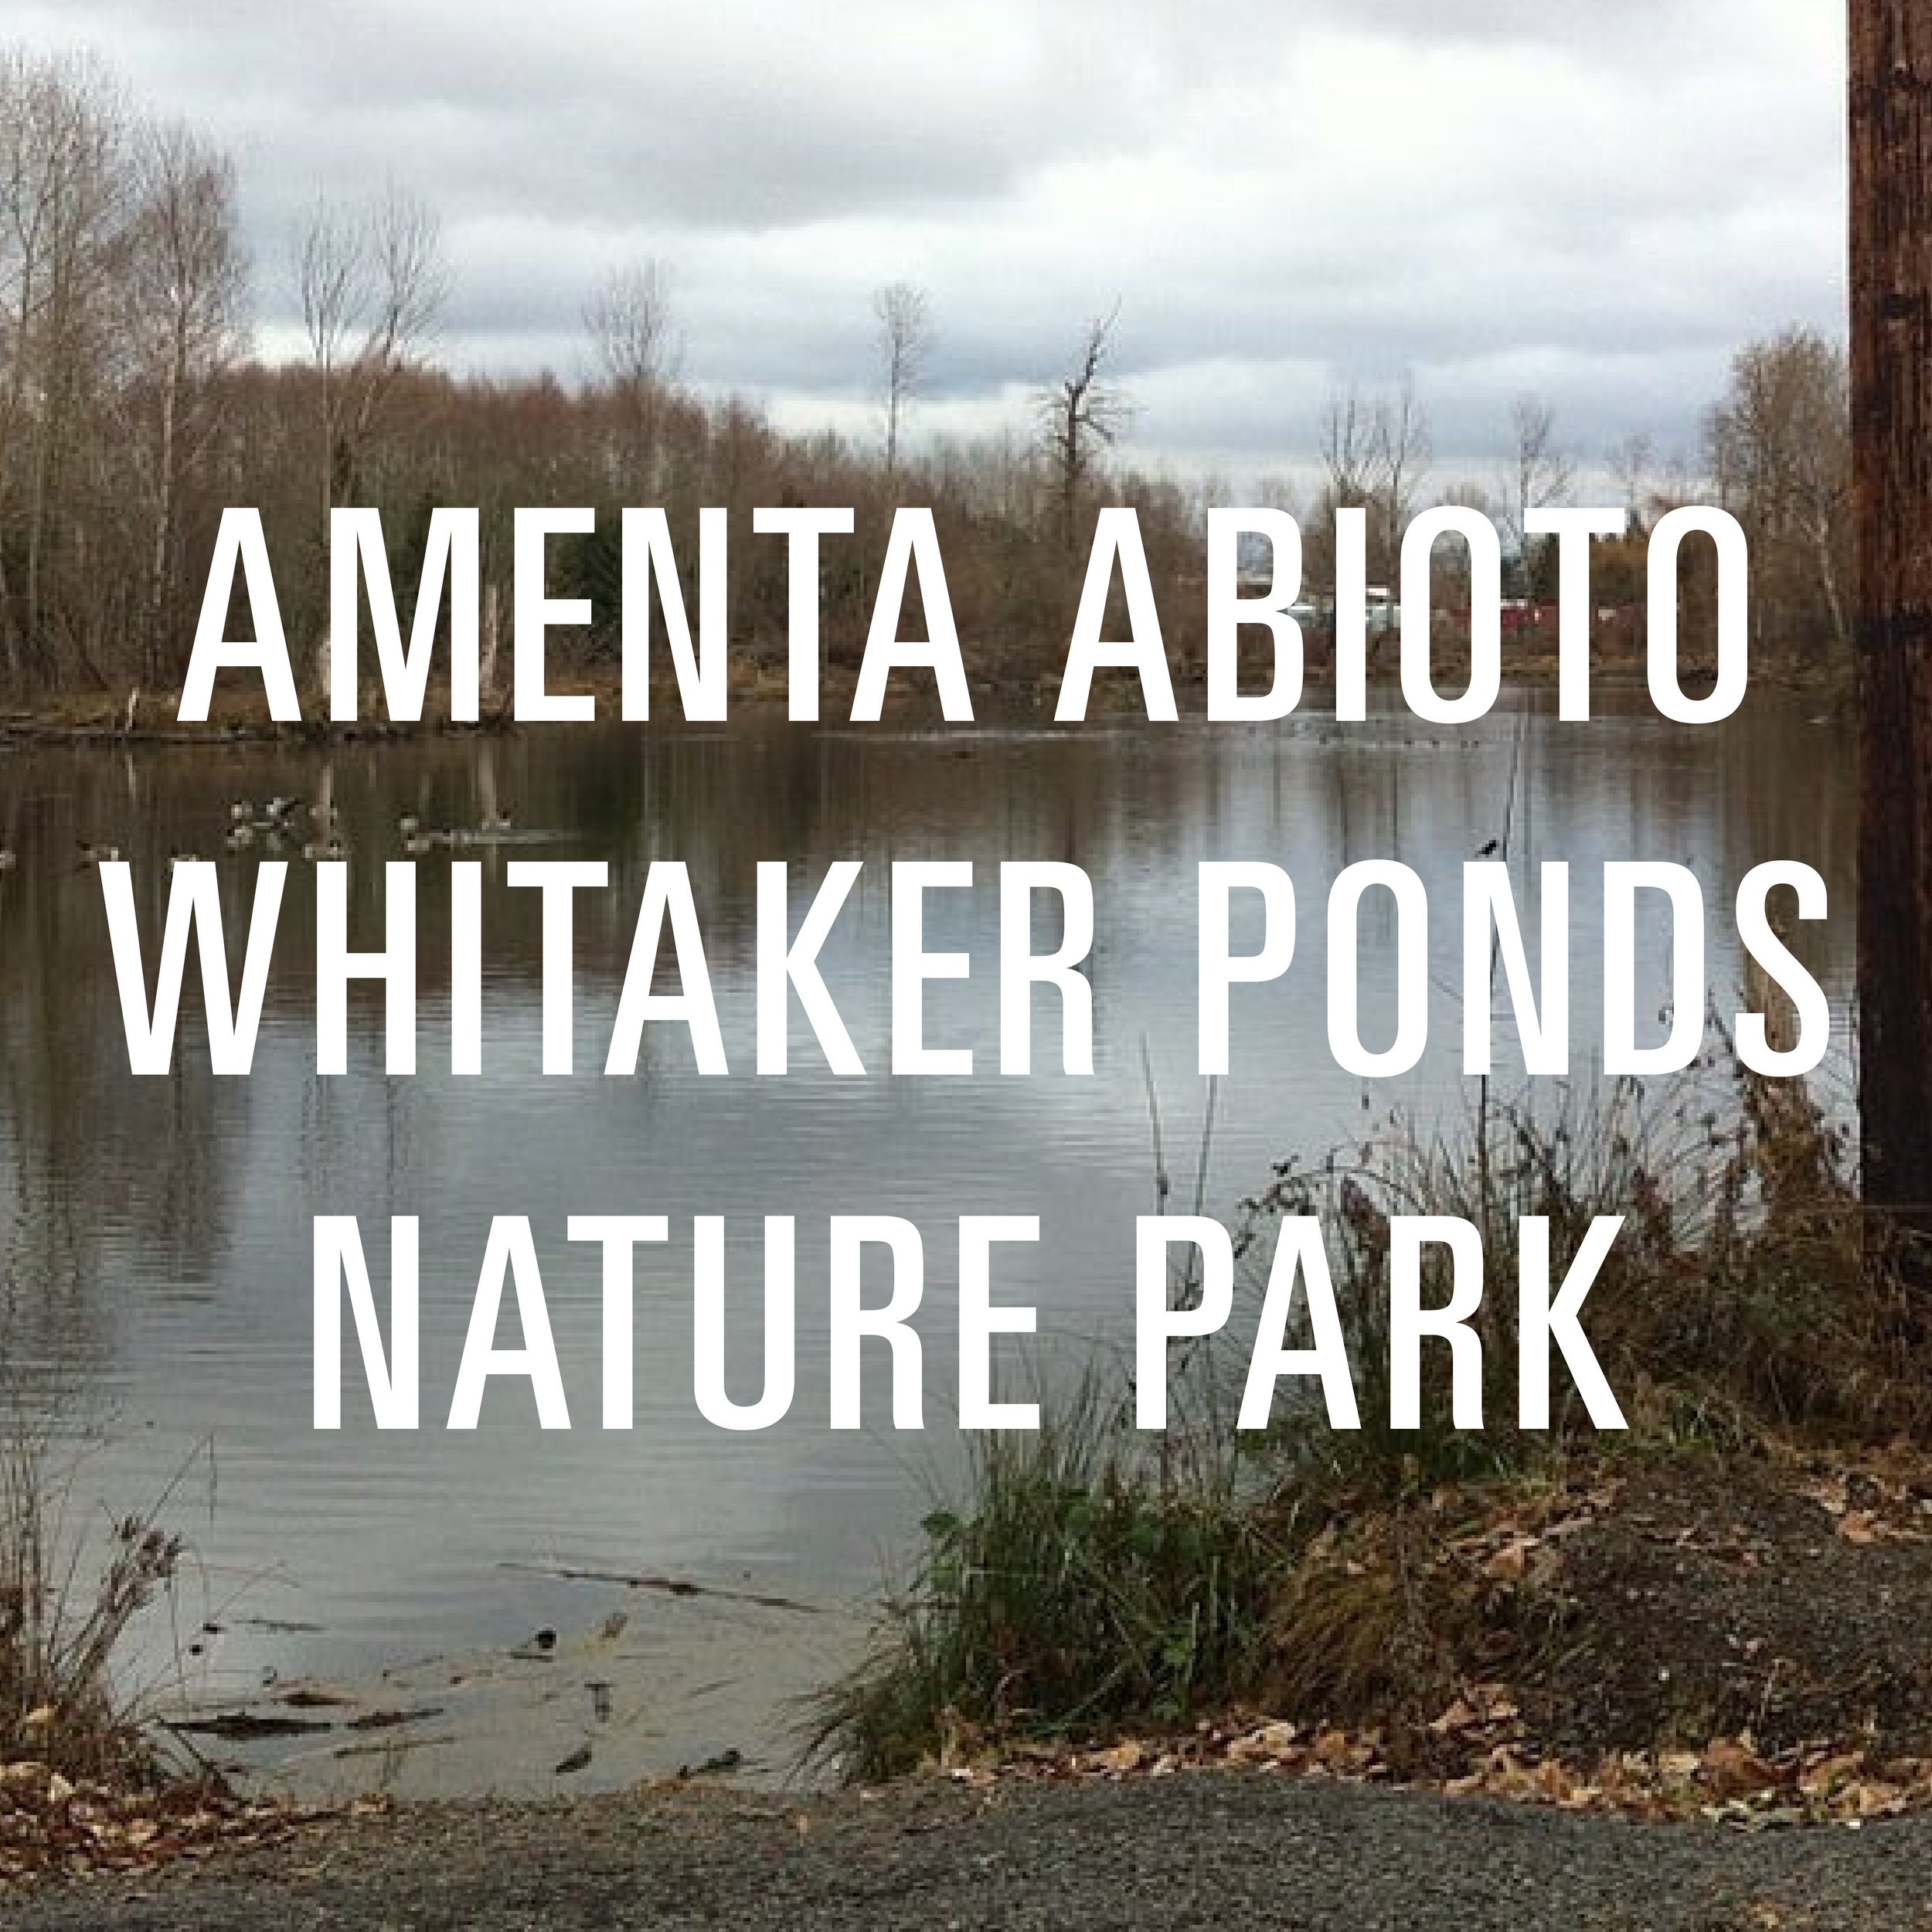 Amenta Abioto Whitaker Ponds Nature Park